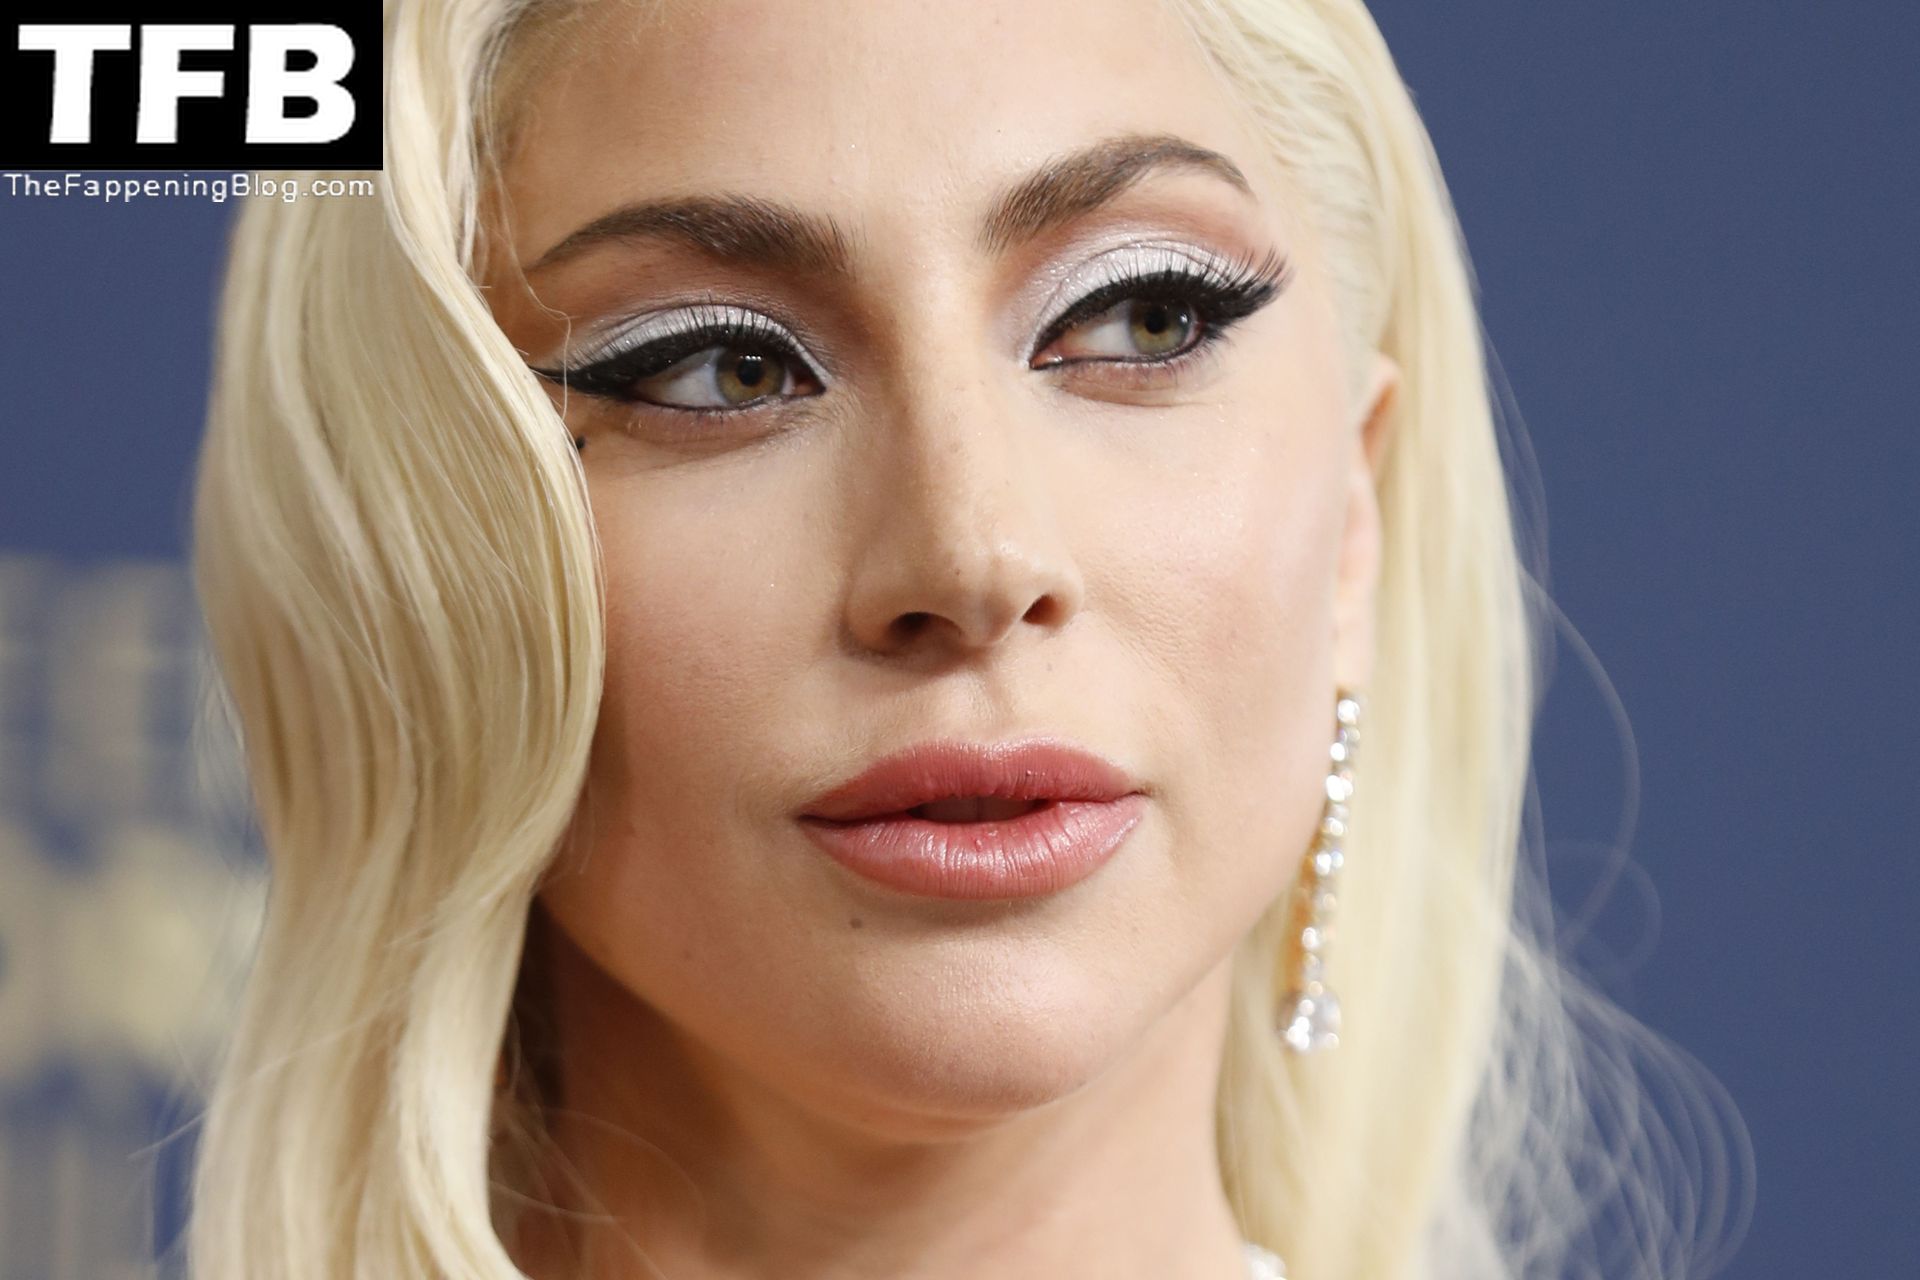 Lady-Gaga-Sexy-The-Fappening-Blog-3.jpg